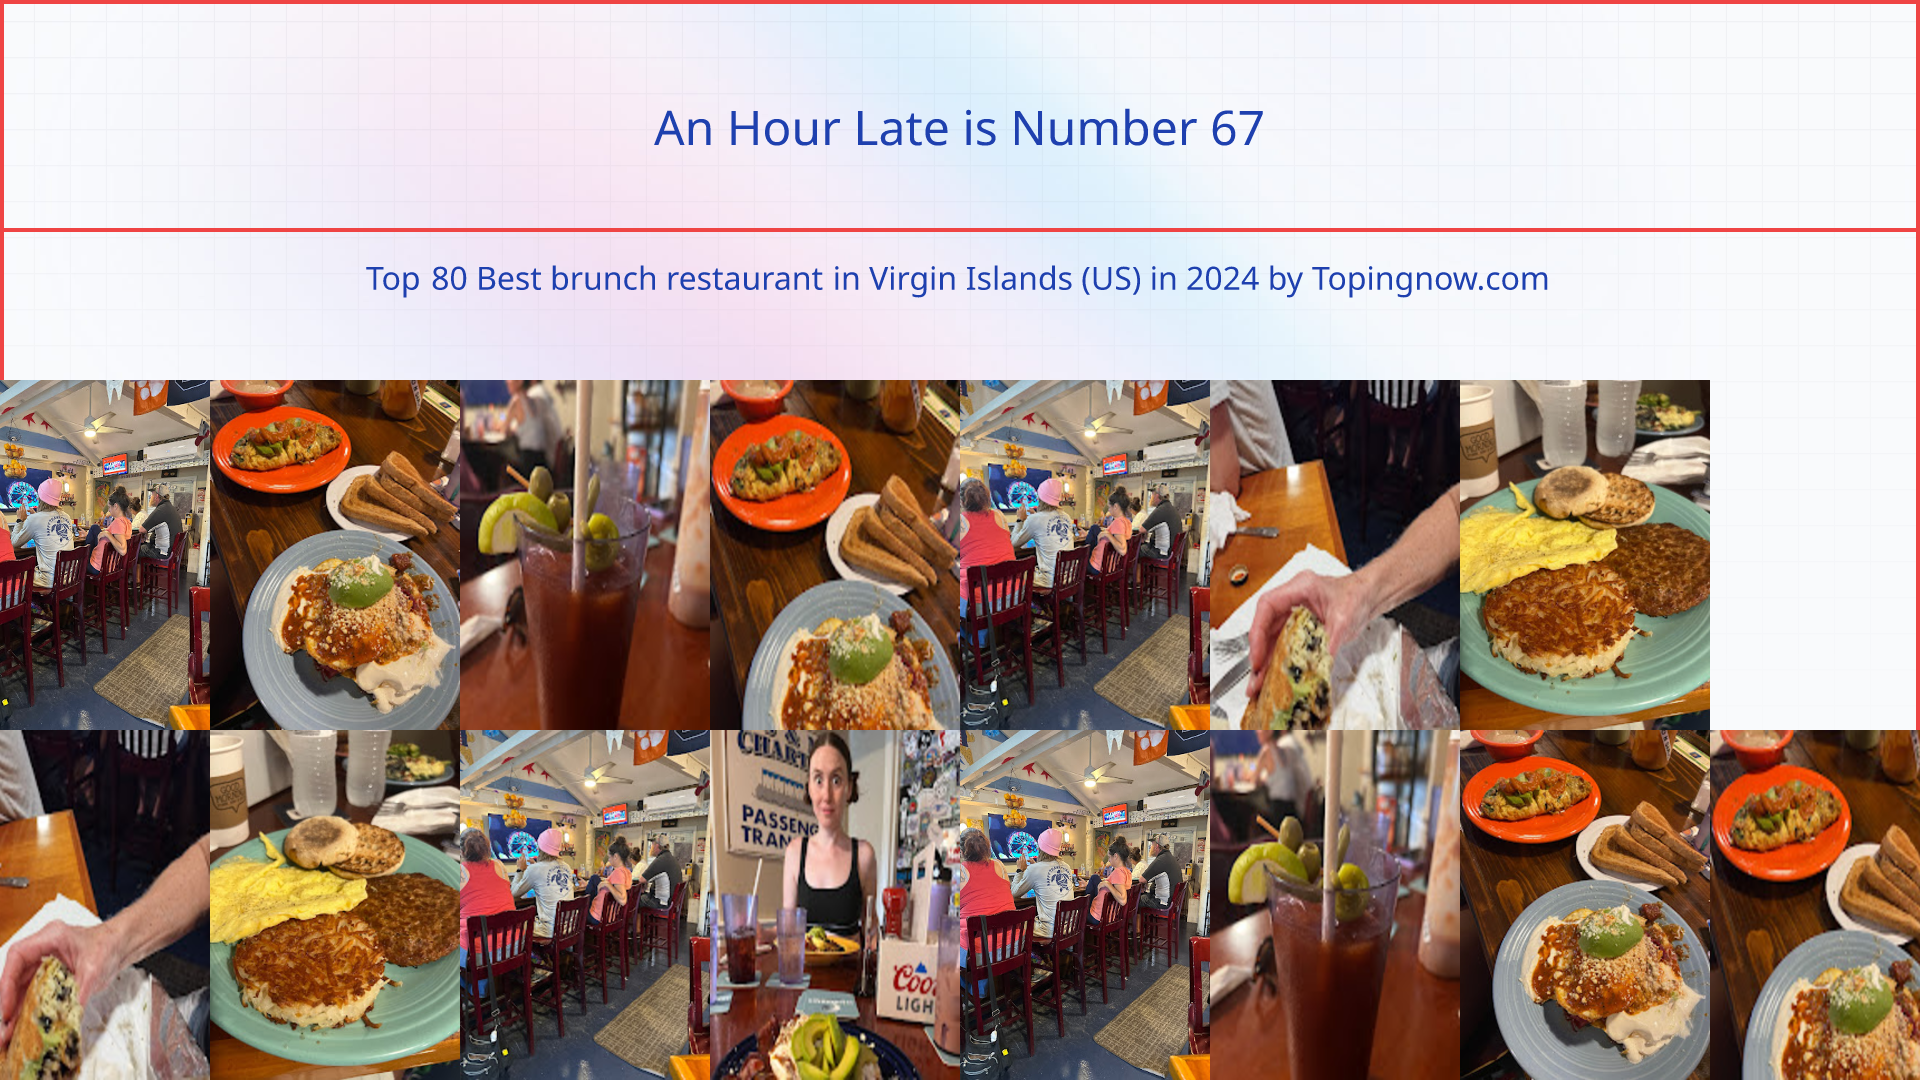 An Hour Late: Top 80 Best brunch restaurant in Virgin Islands (US) in 2024